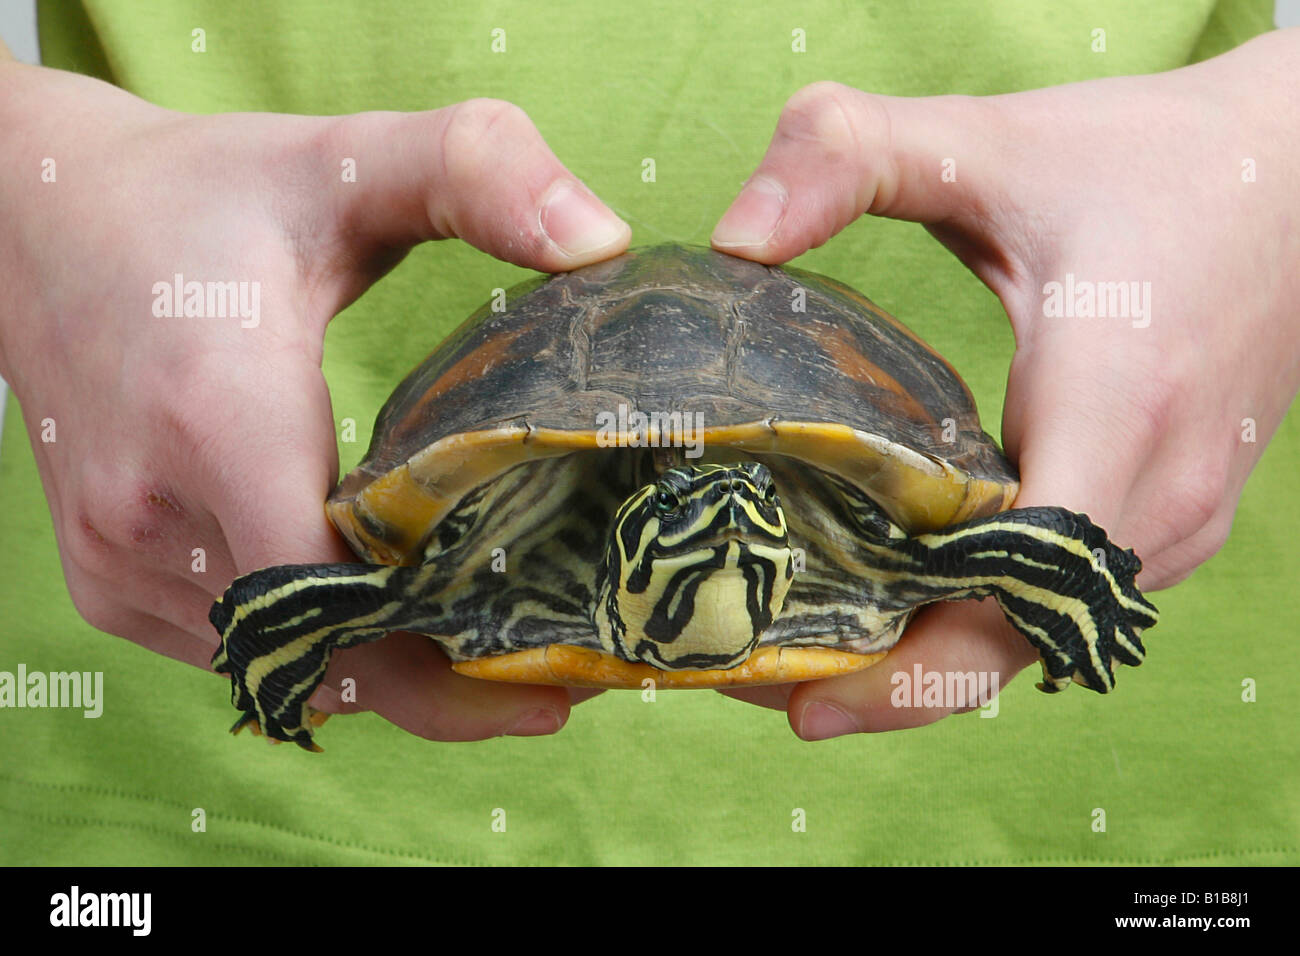 Florida Redbelly Turtle / Pseudemys nelsoni Stock Photo